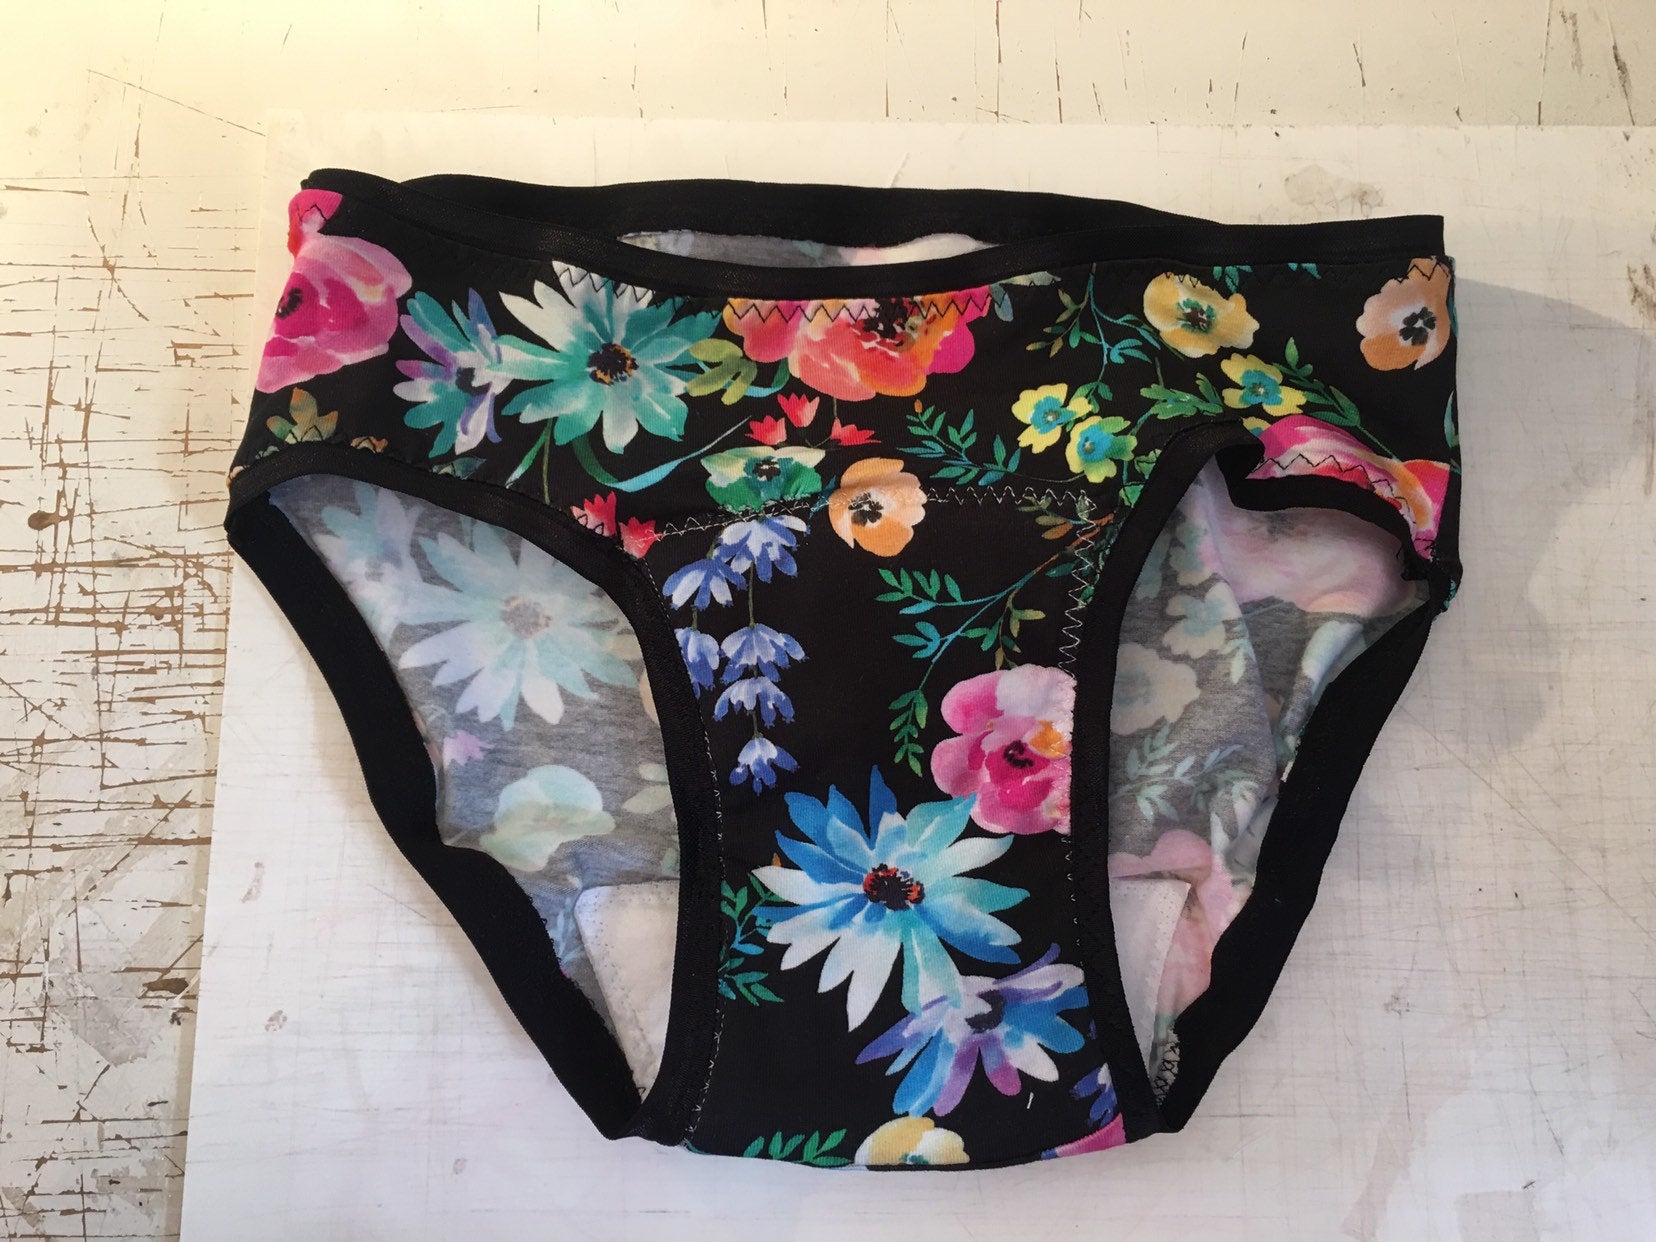 Period panties, period underwear, period knickers – MadeWithMummyLove